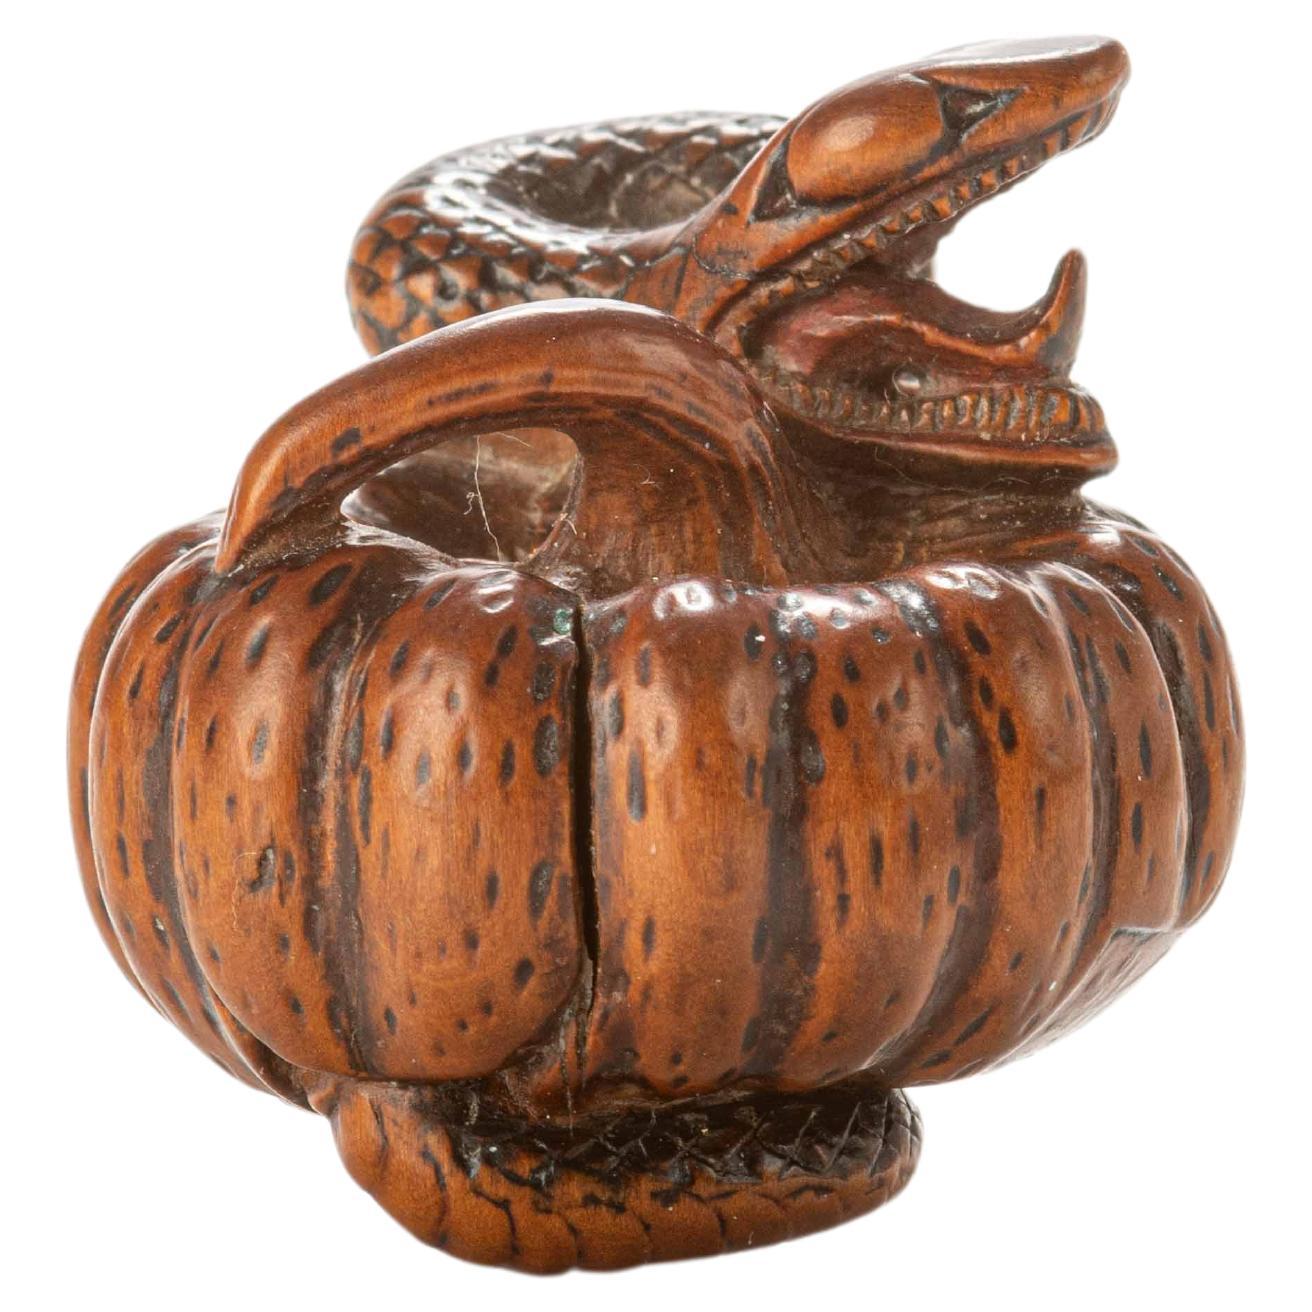 A boxwood netsuke depicting a snake wrapping around a pumpkin